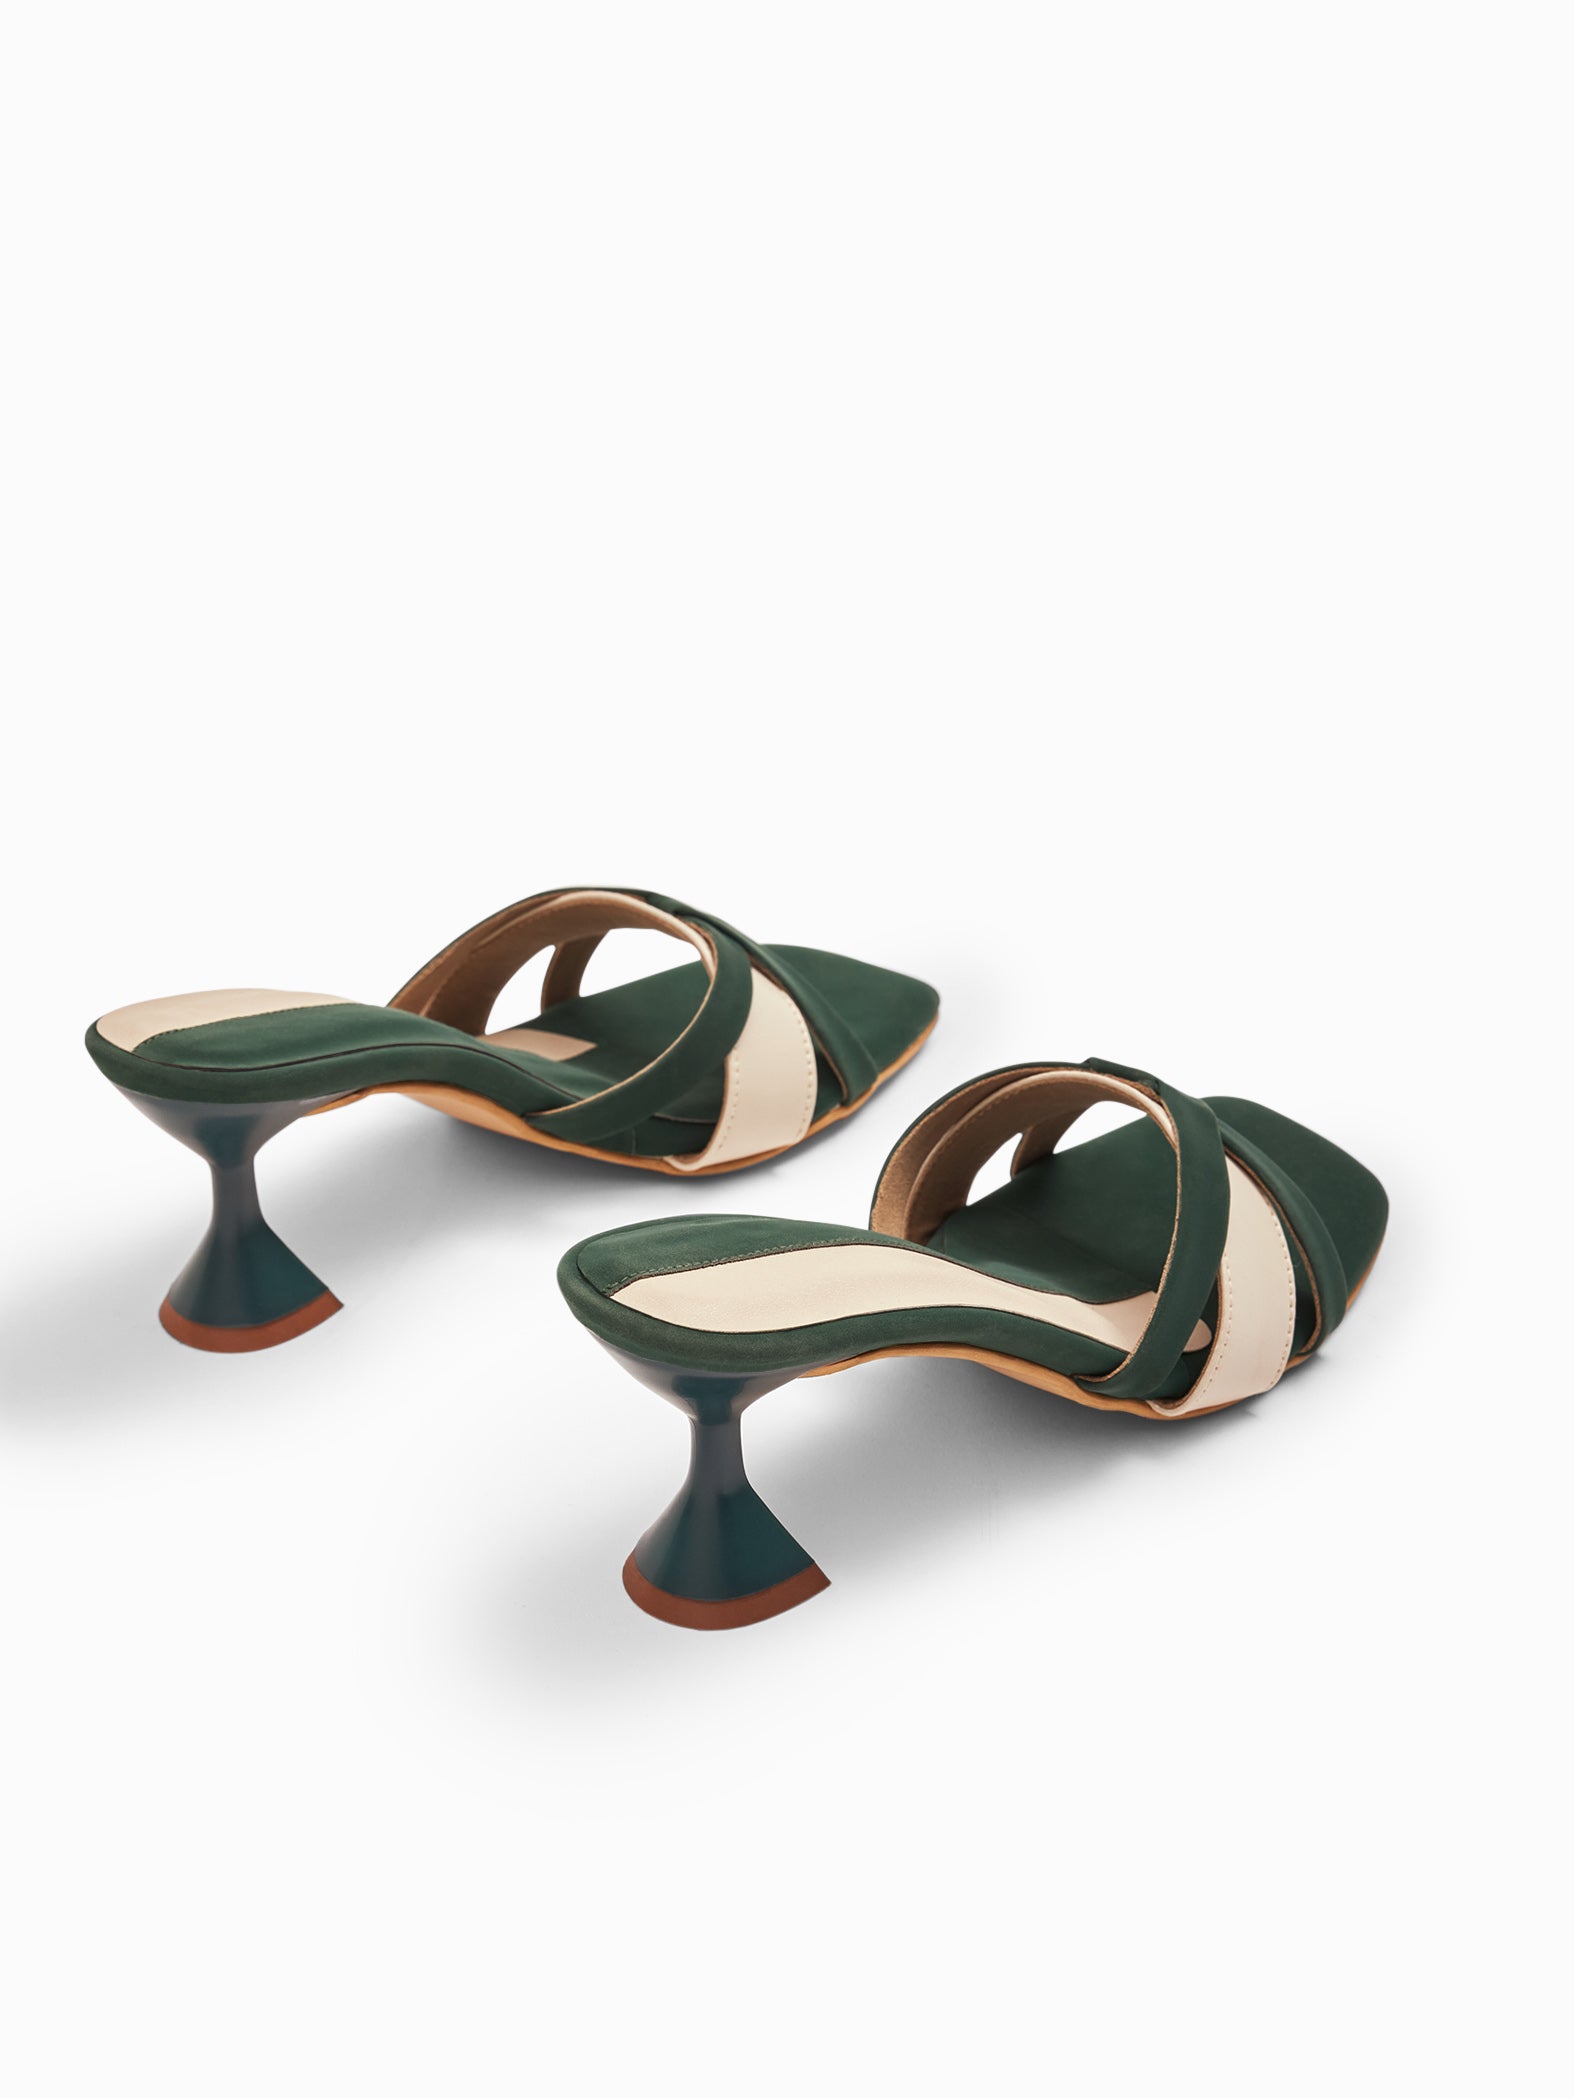 Emerald & Cream Spool Heels